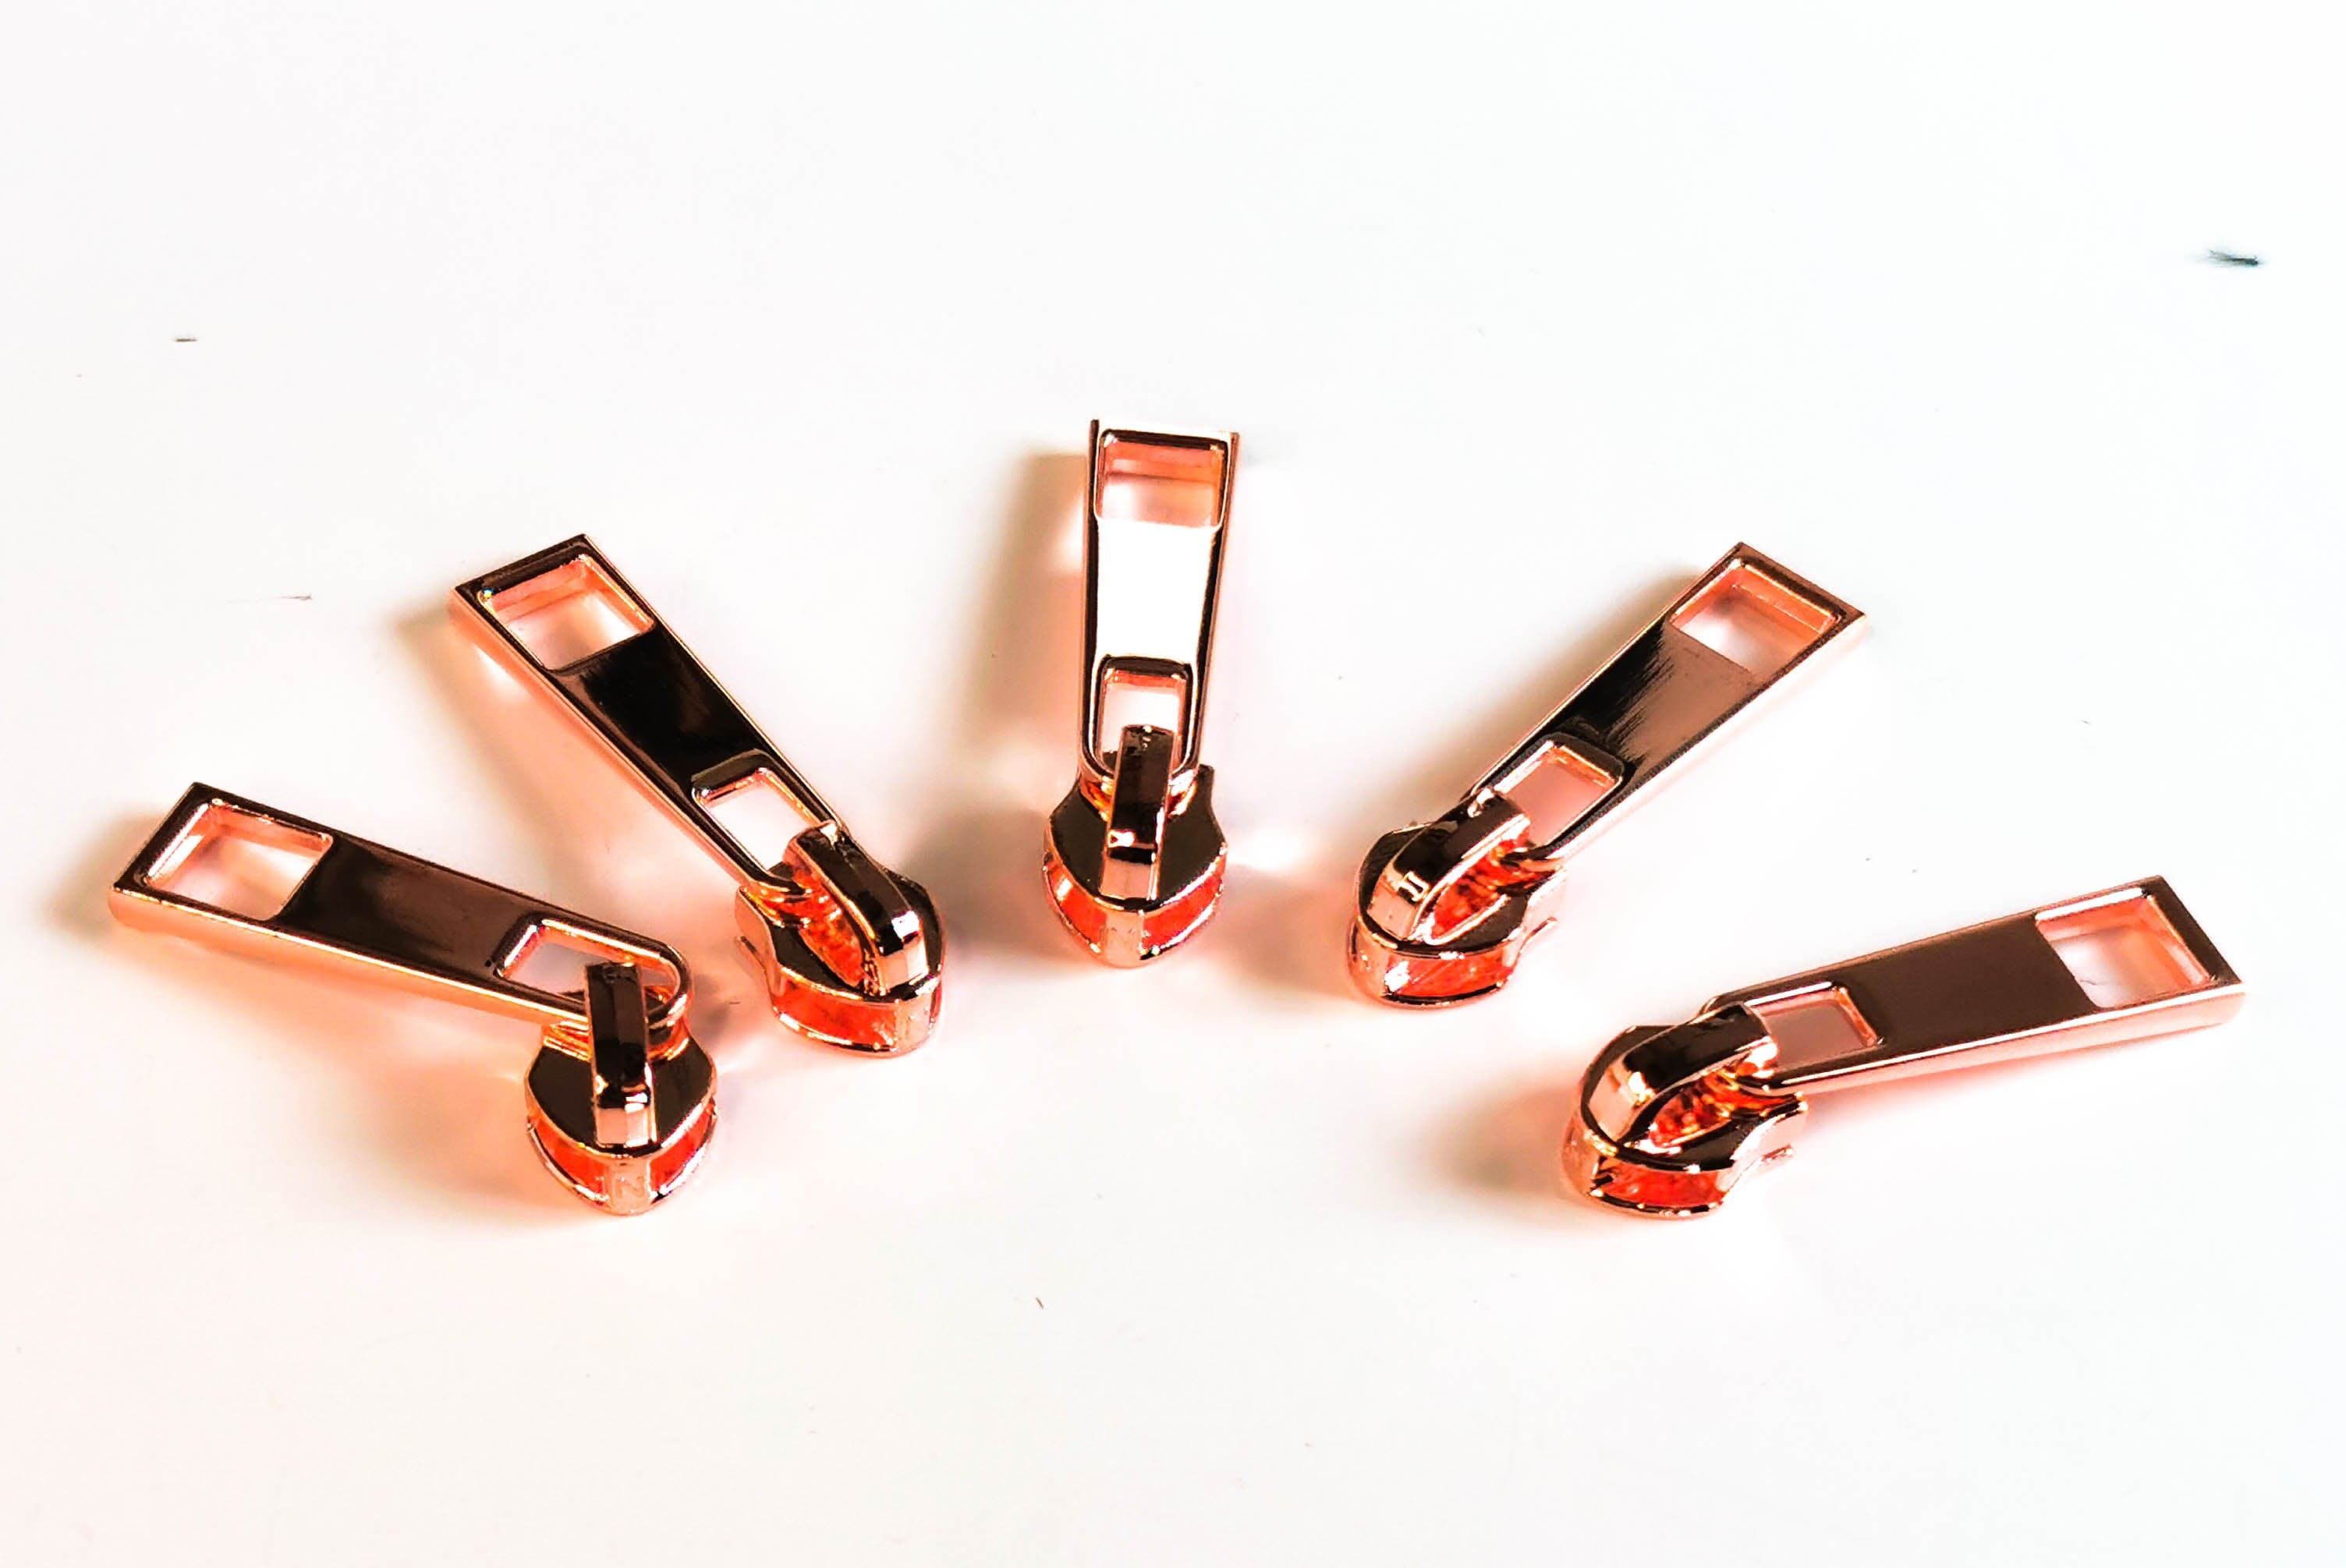 Zipper Pulls. For #5 Metallic Nylon Coil Zipper tape Pack of Five. By Kiwi Bagineers - Kiwi Bagineers